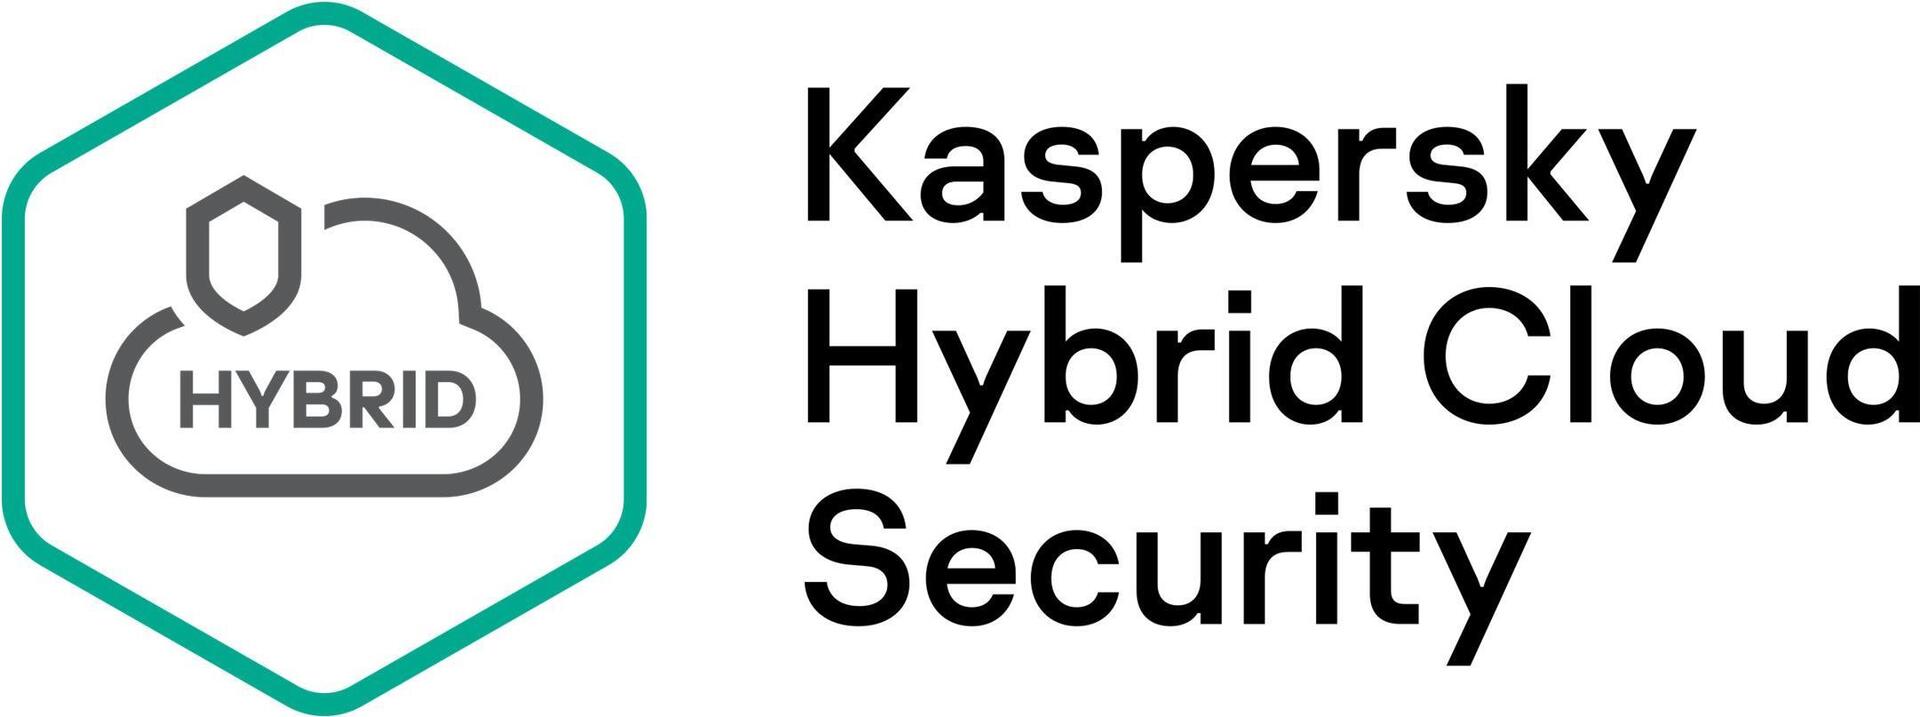 Kaspersky Hybrid Cloud Security Enterprise CPU European Edi. 10-14 CPU 1-Year Renewal License (KL4553XAKFR)